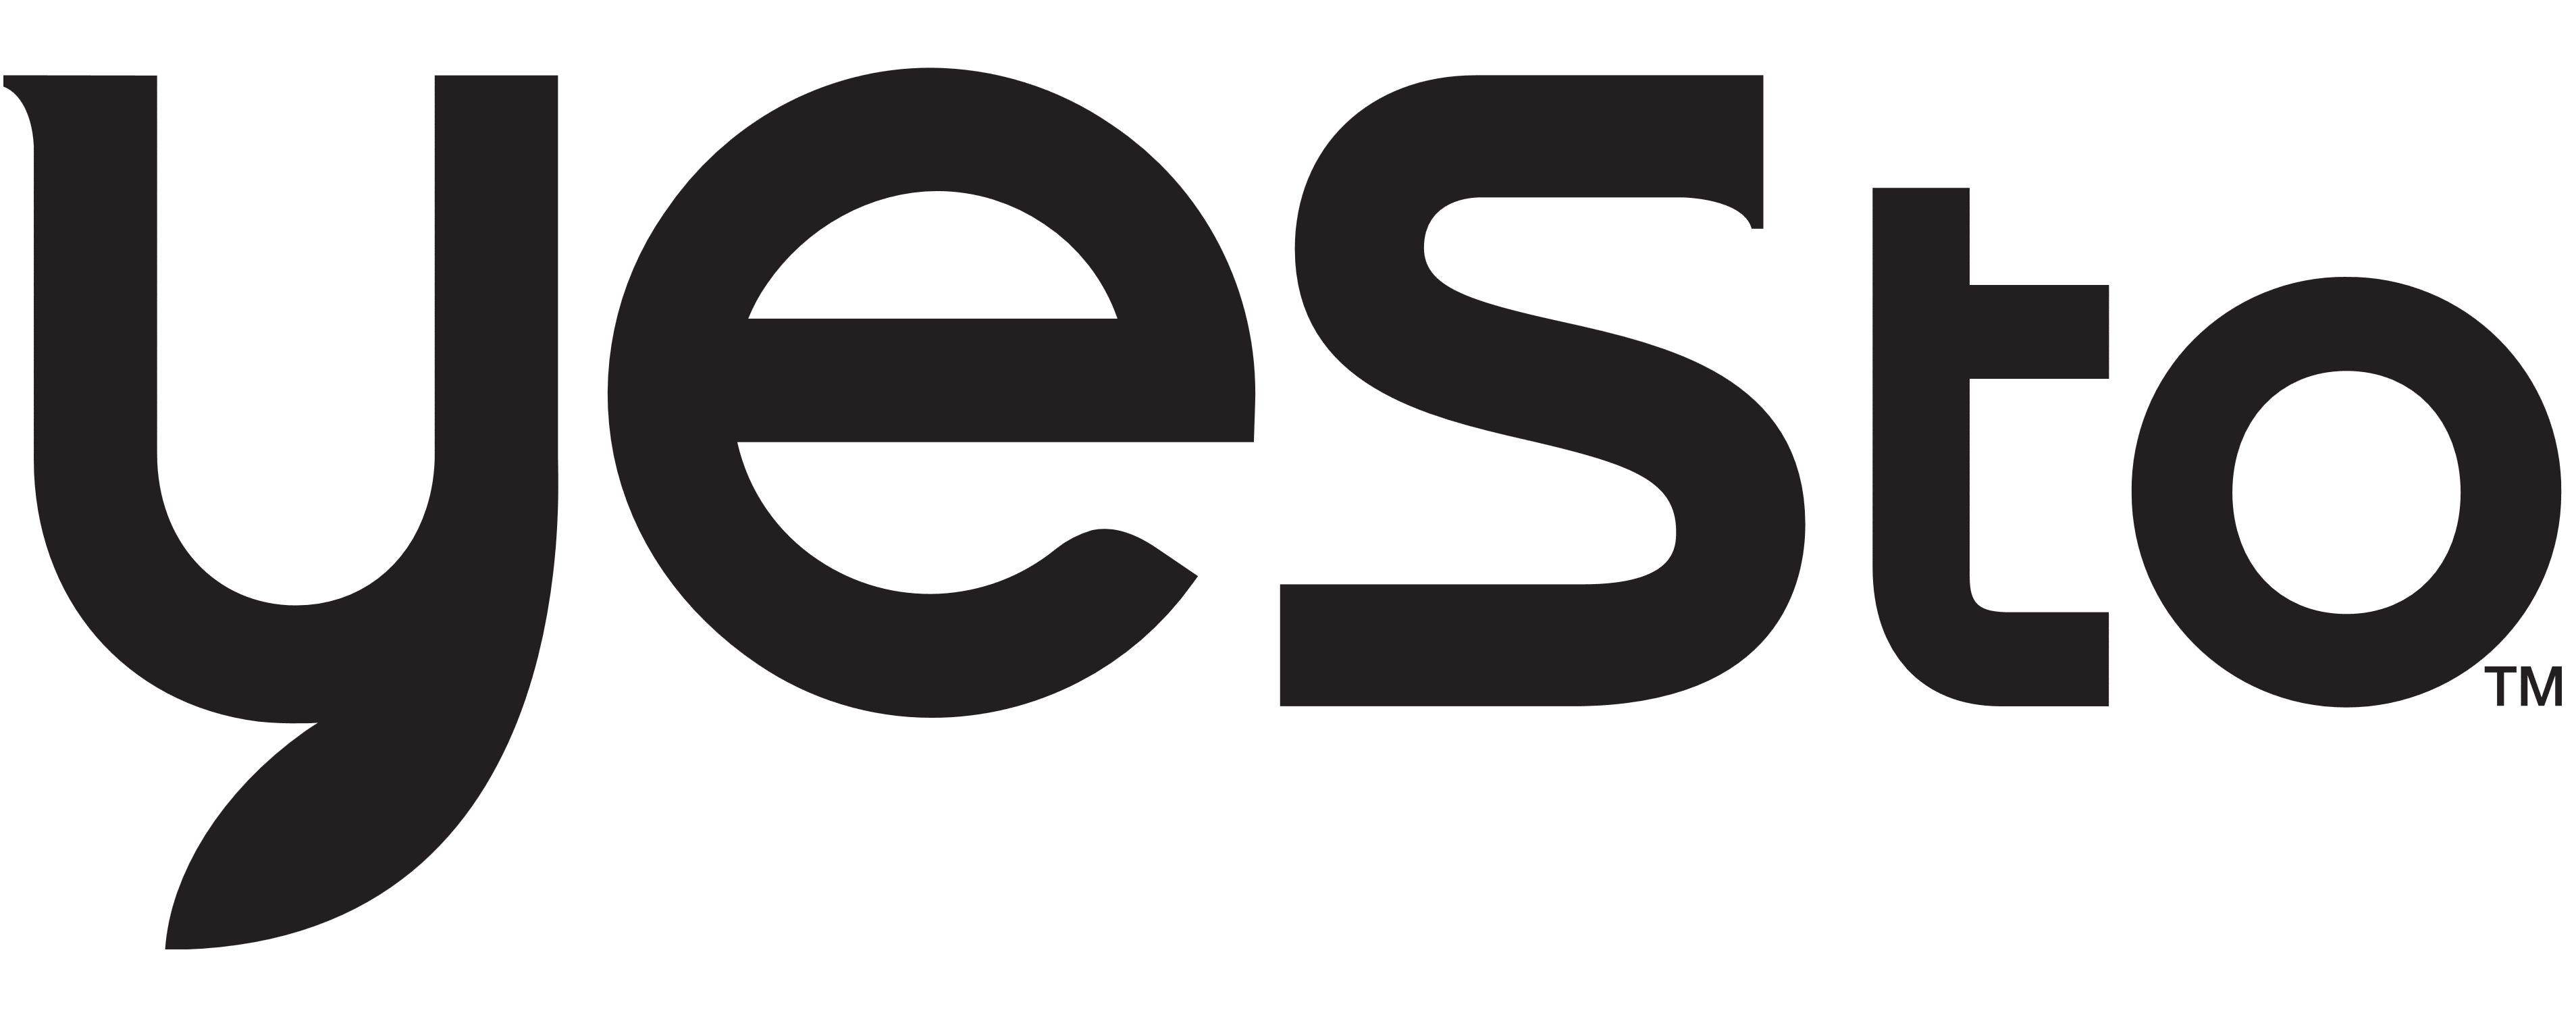 YesTo (Yes To) logo, logotype